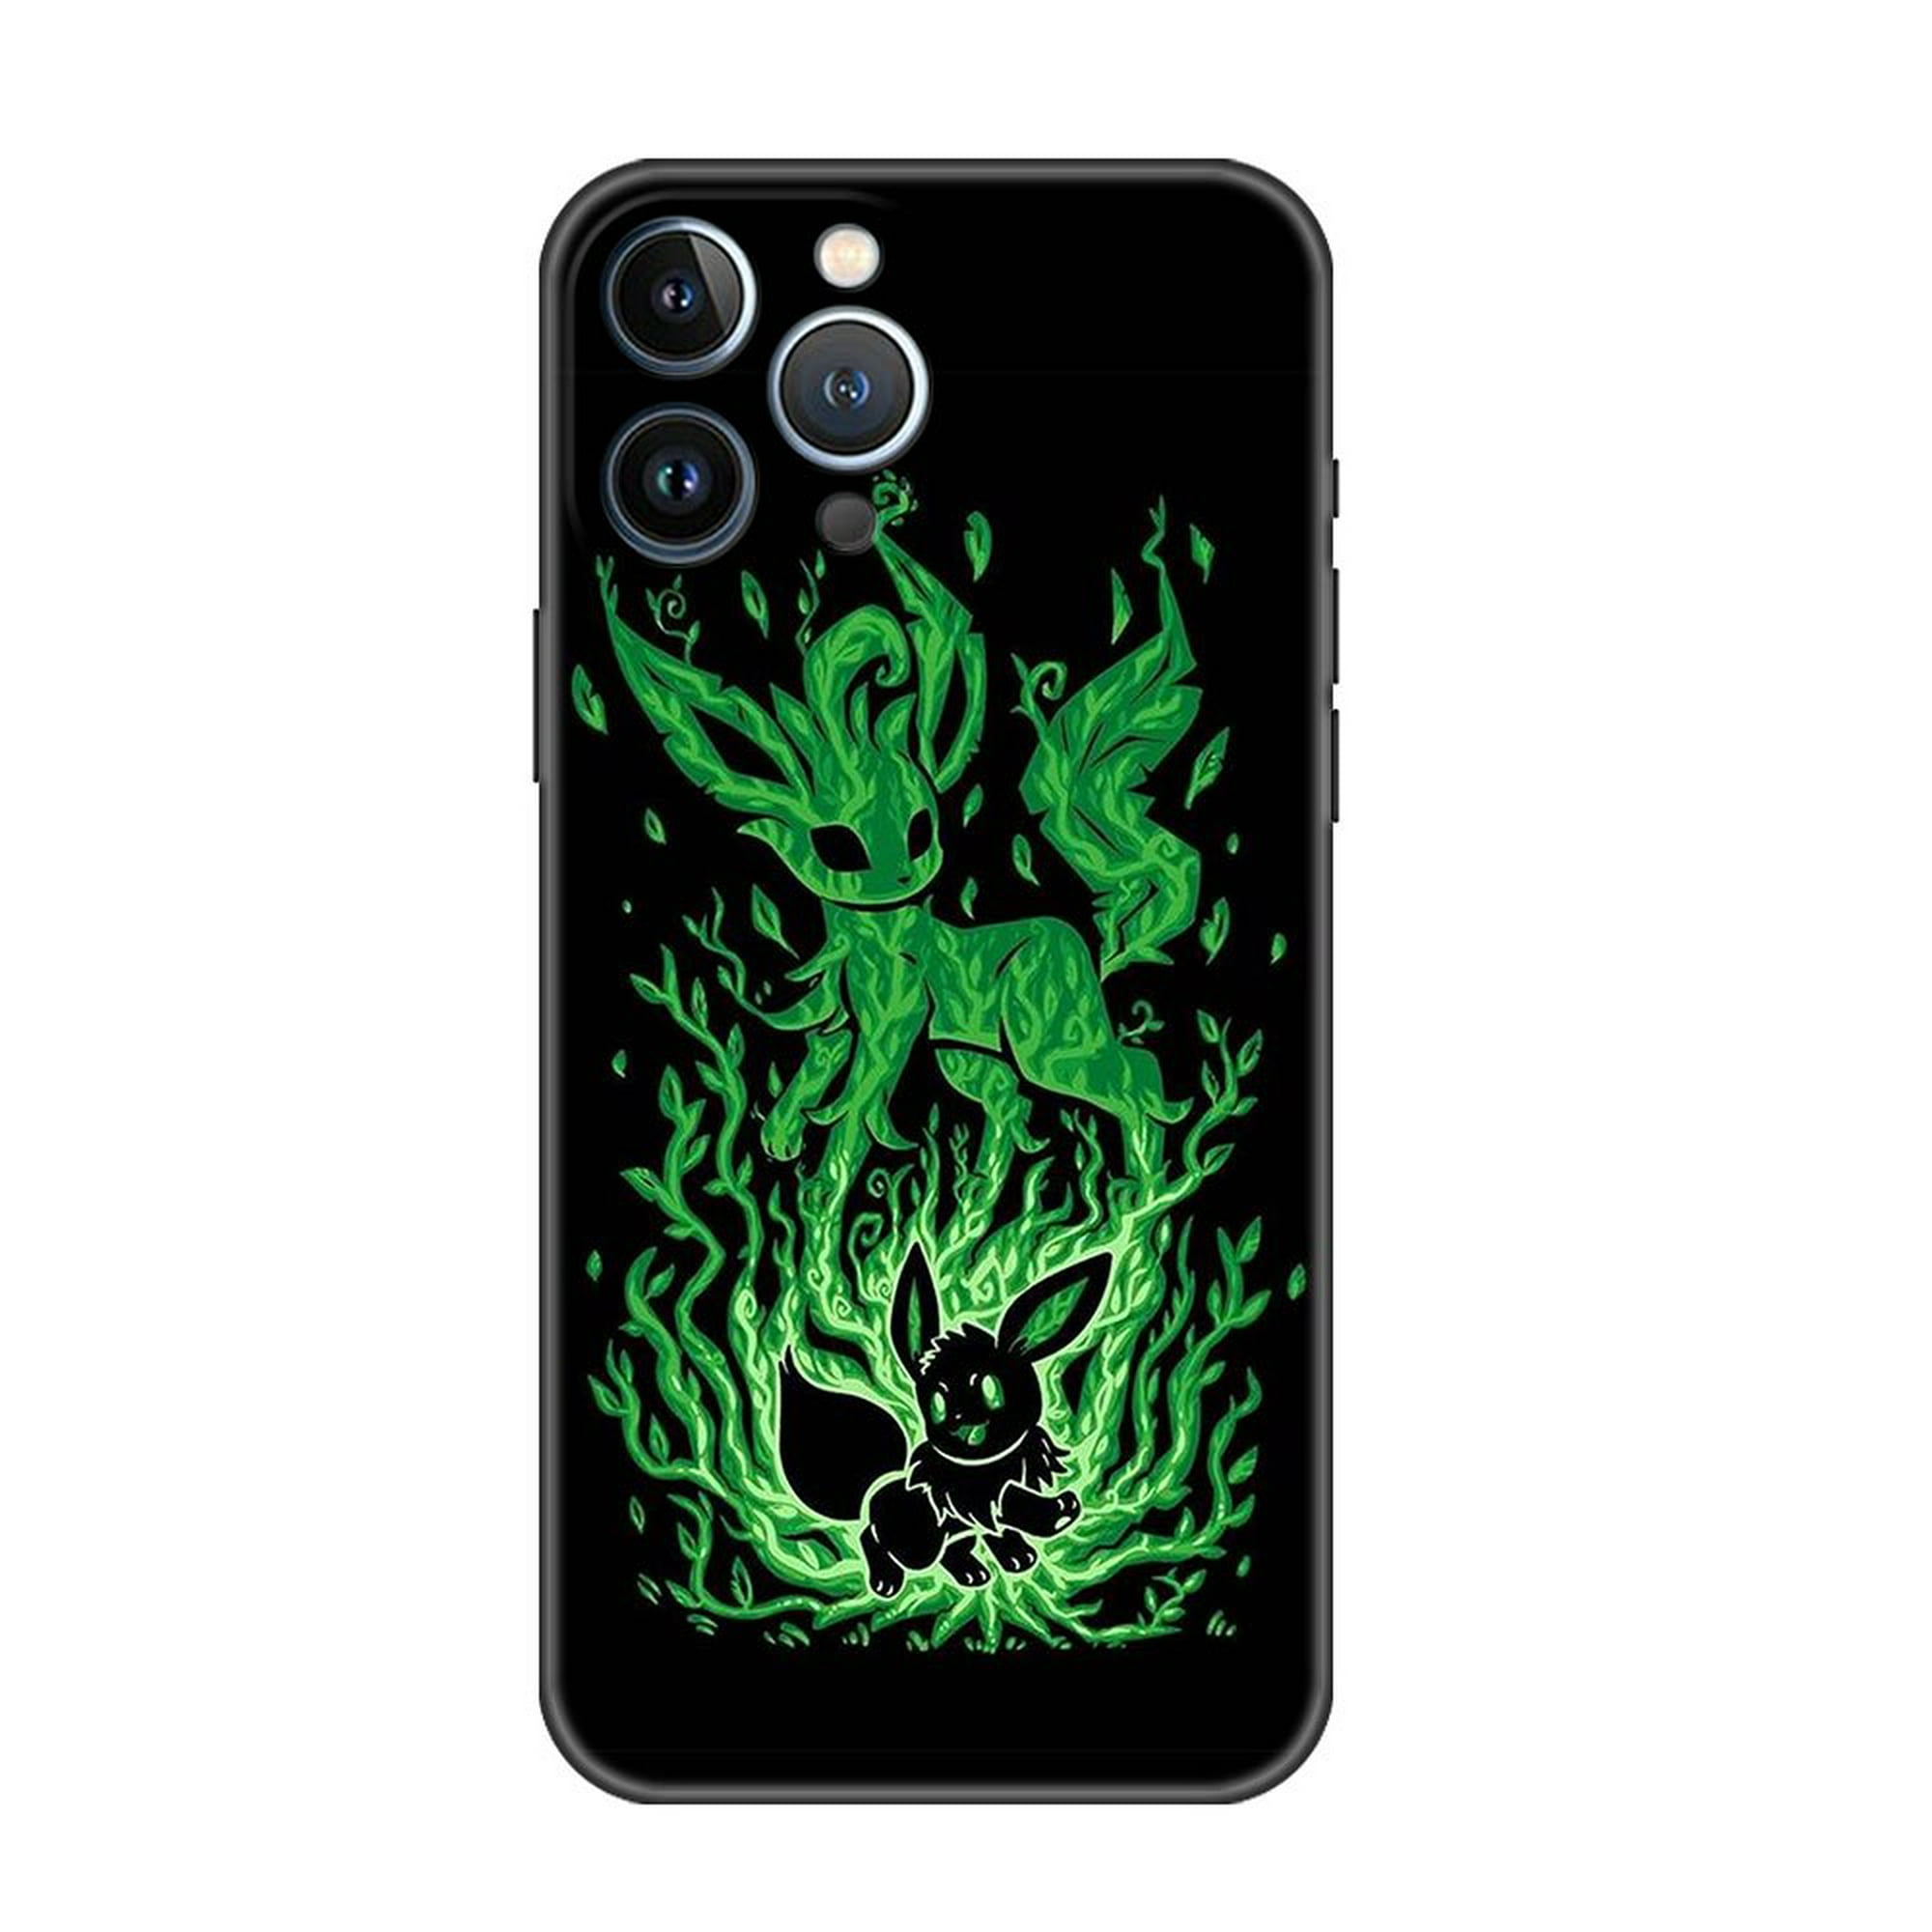 Funda para iPhone X, Case InstaCase Biodegradable Negro EcoFriendly iPhone  X, Protector para iPhone X Biodegradables